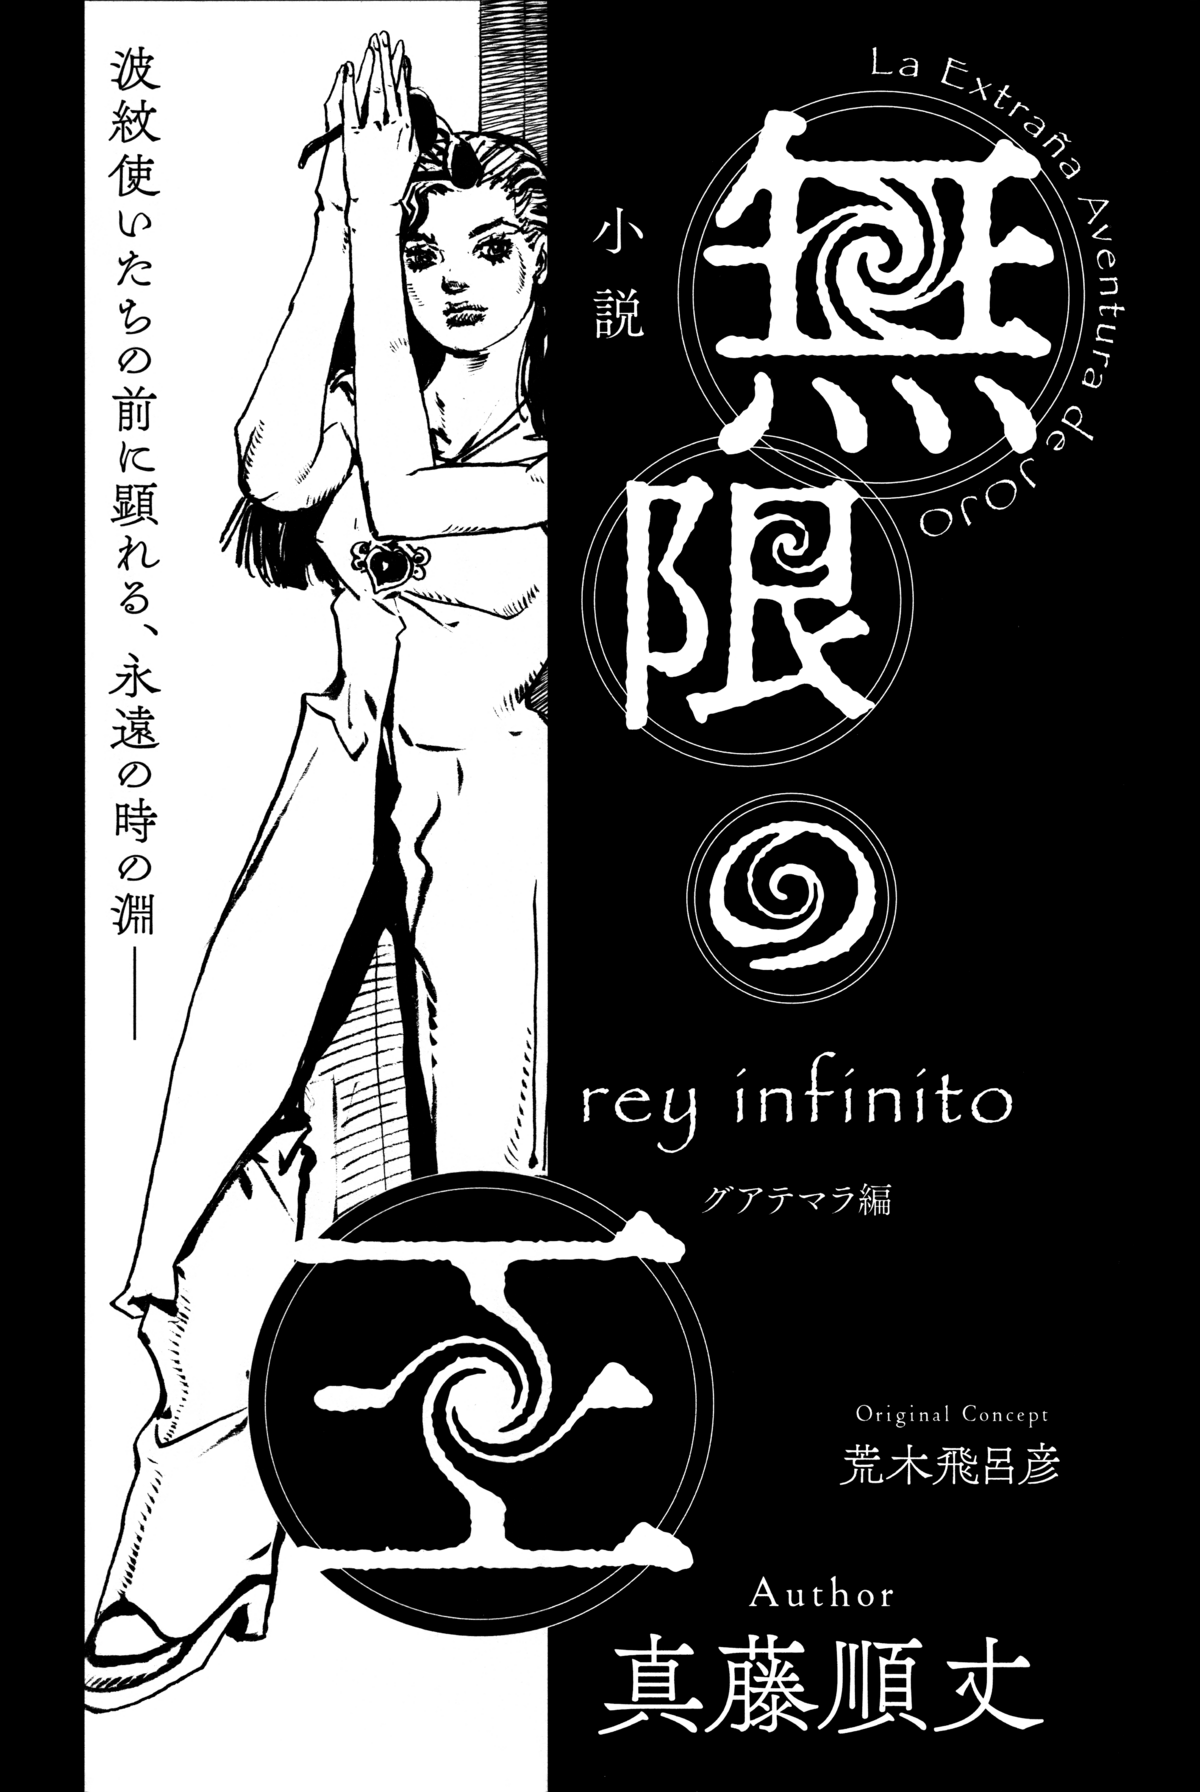 JoJo no Kimyō na Bōken (Volume) - Comic Vine